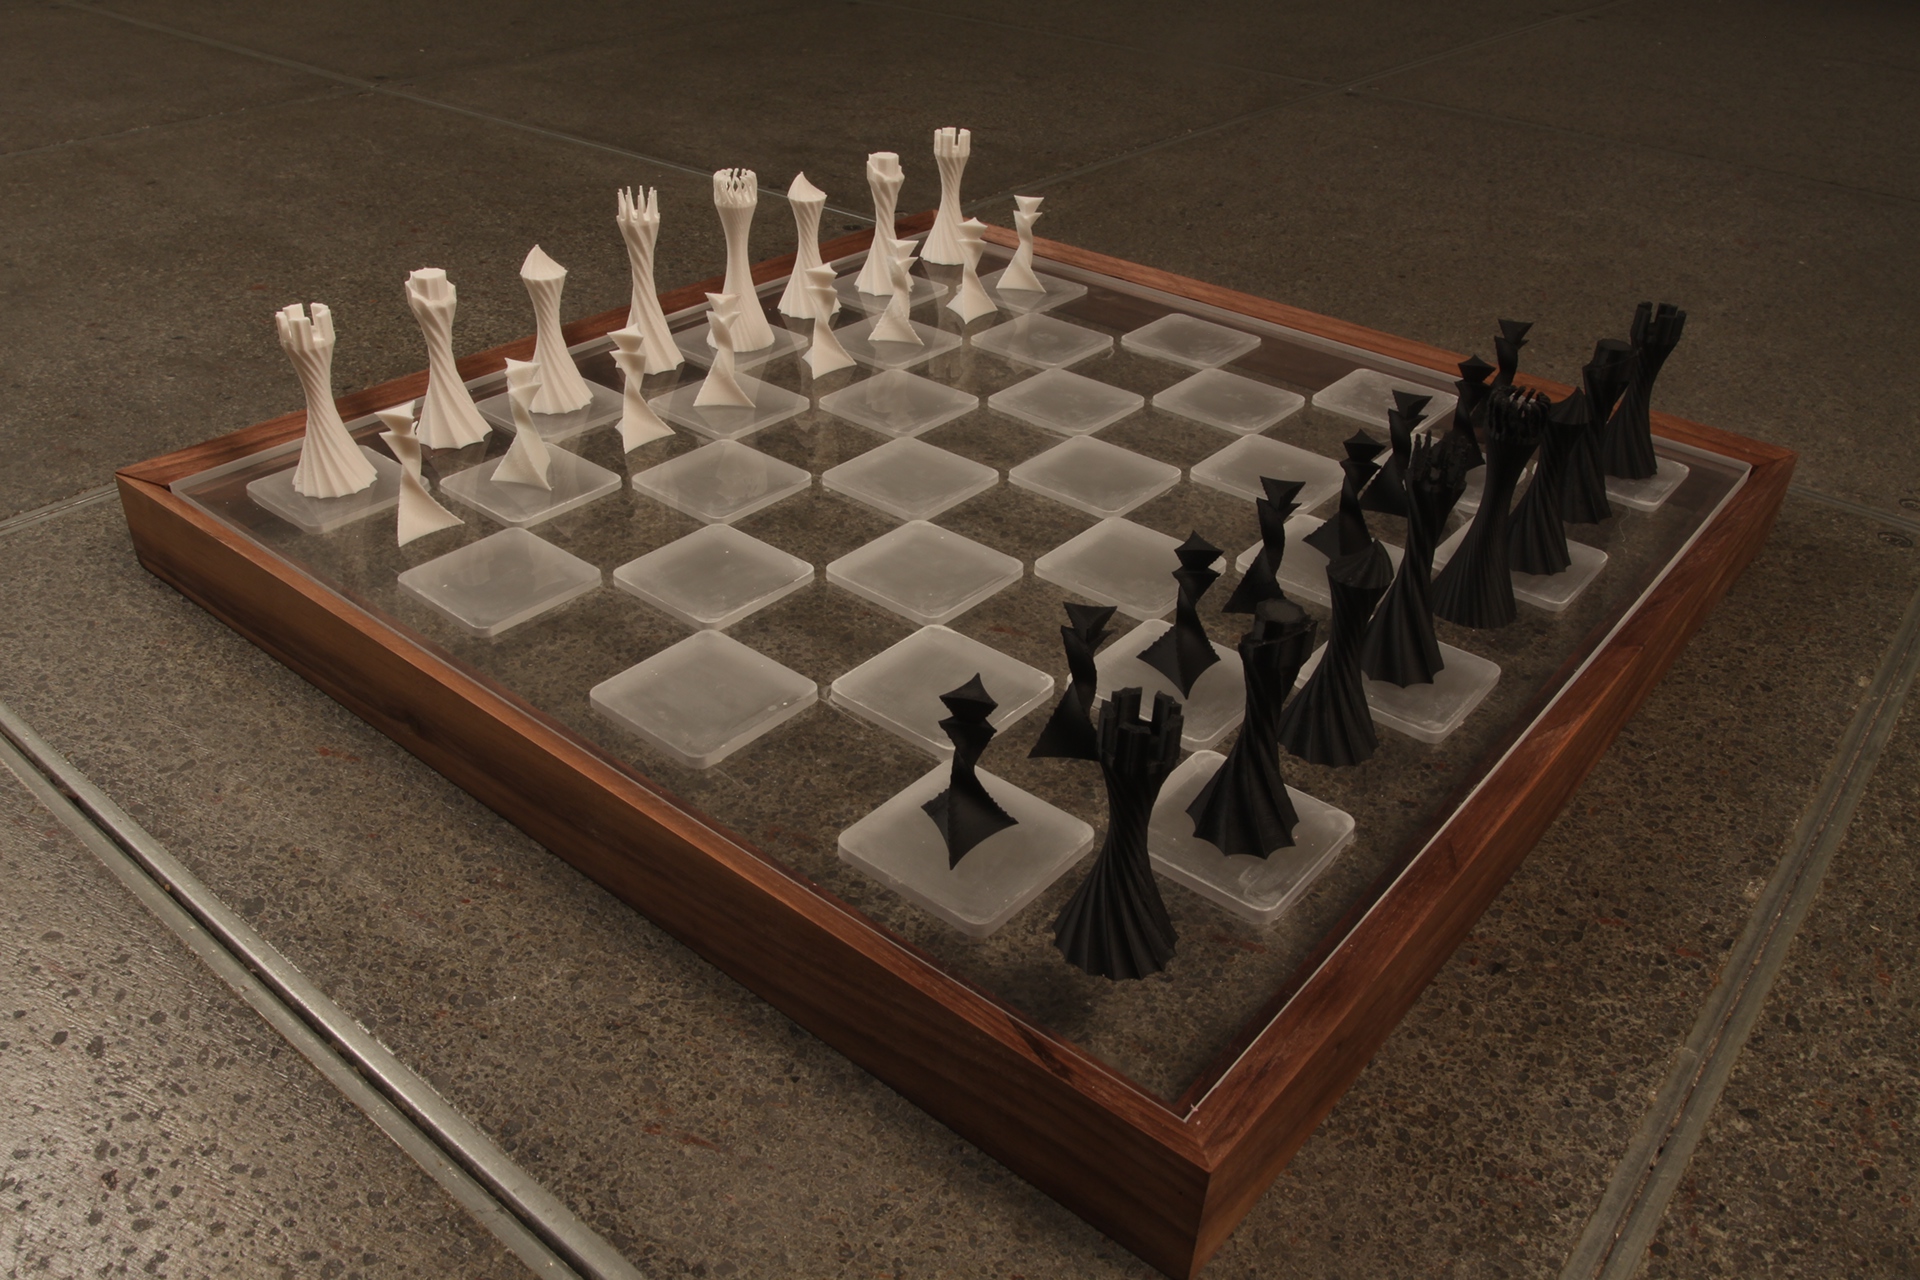 3D printed Parametric Chess Set on Behance